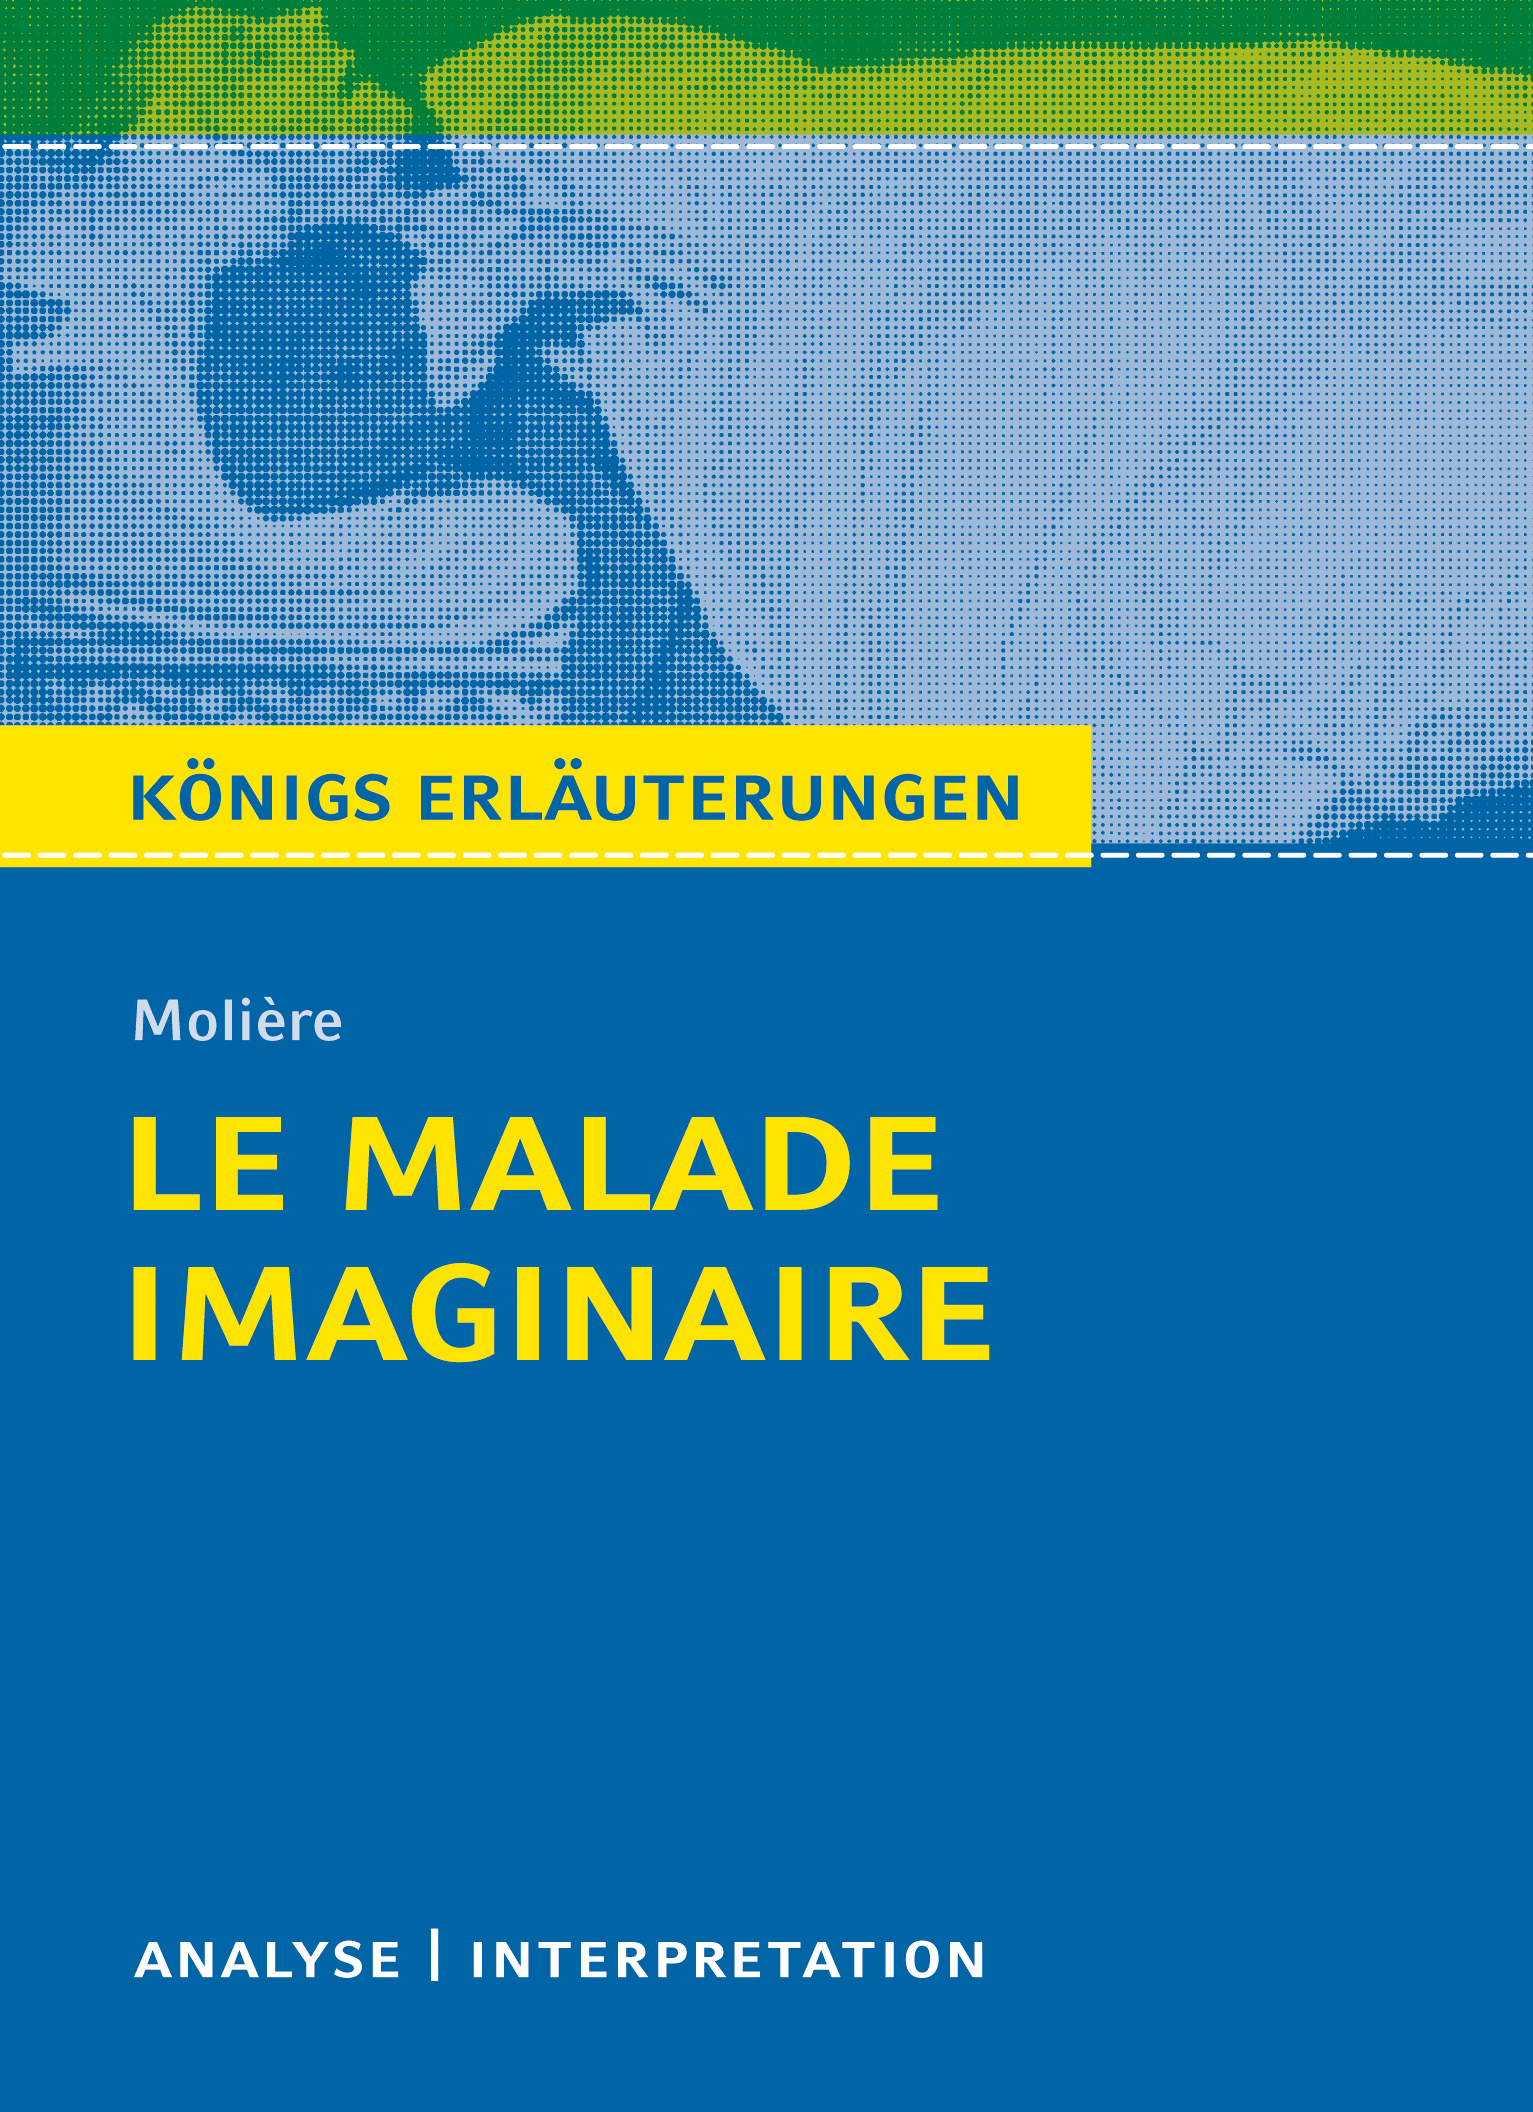 Le Malade imaginaire - Der eingebildete Kranke